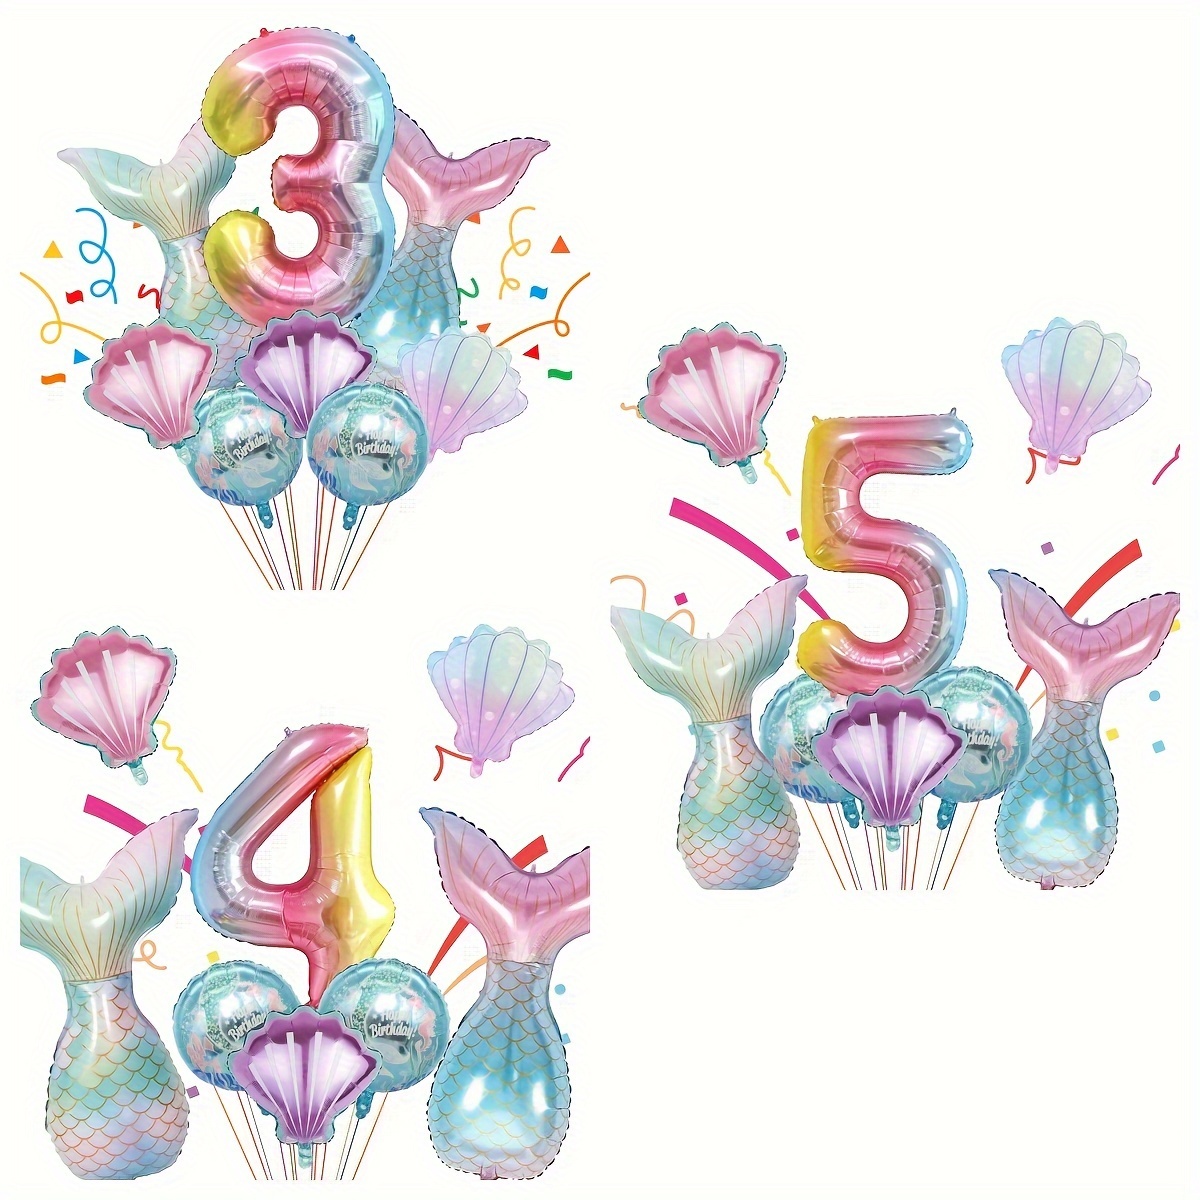 Ballons queue de sirène en arc, 87 pièces, guirlande décorations